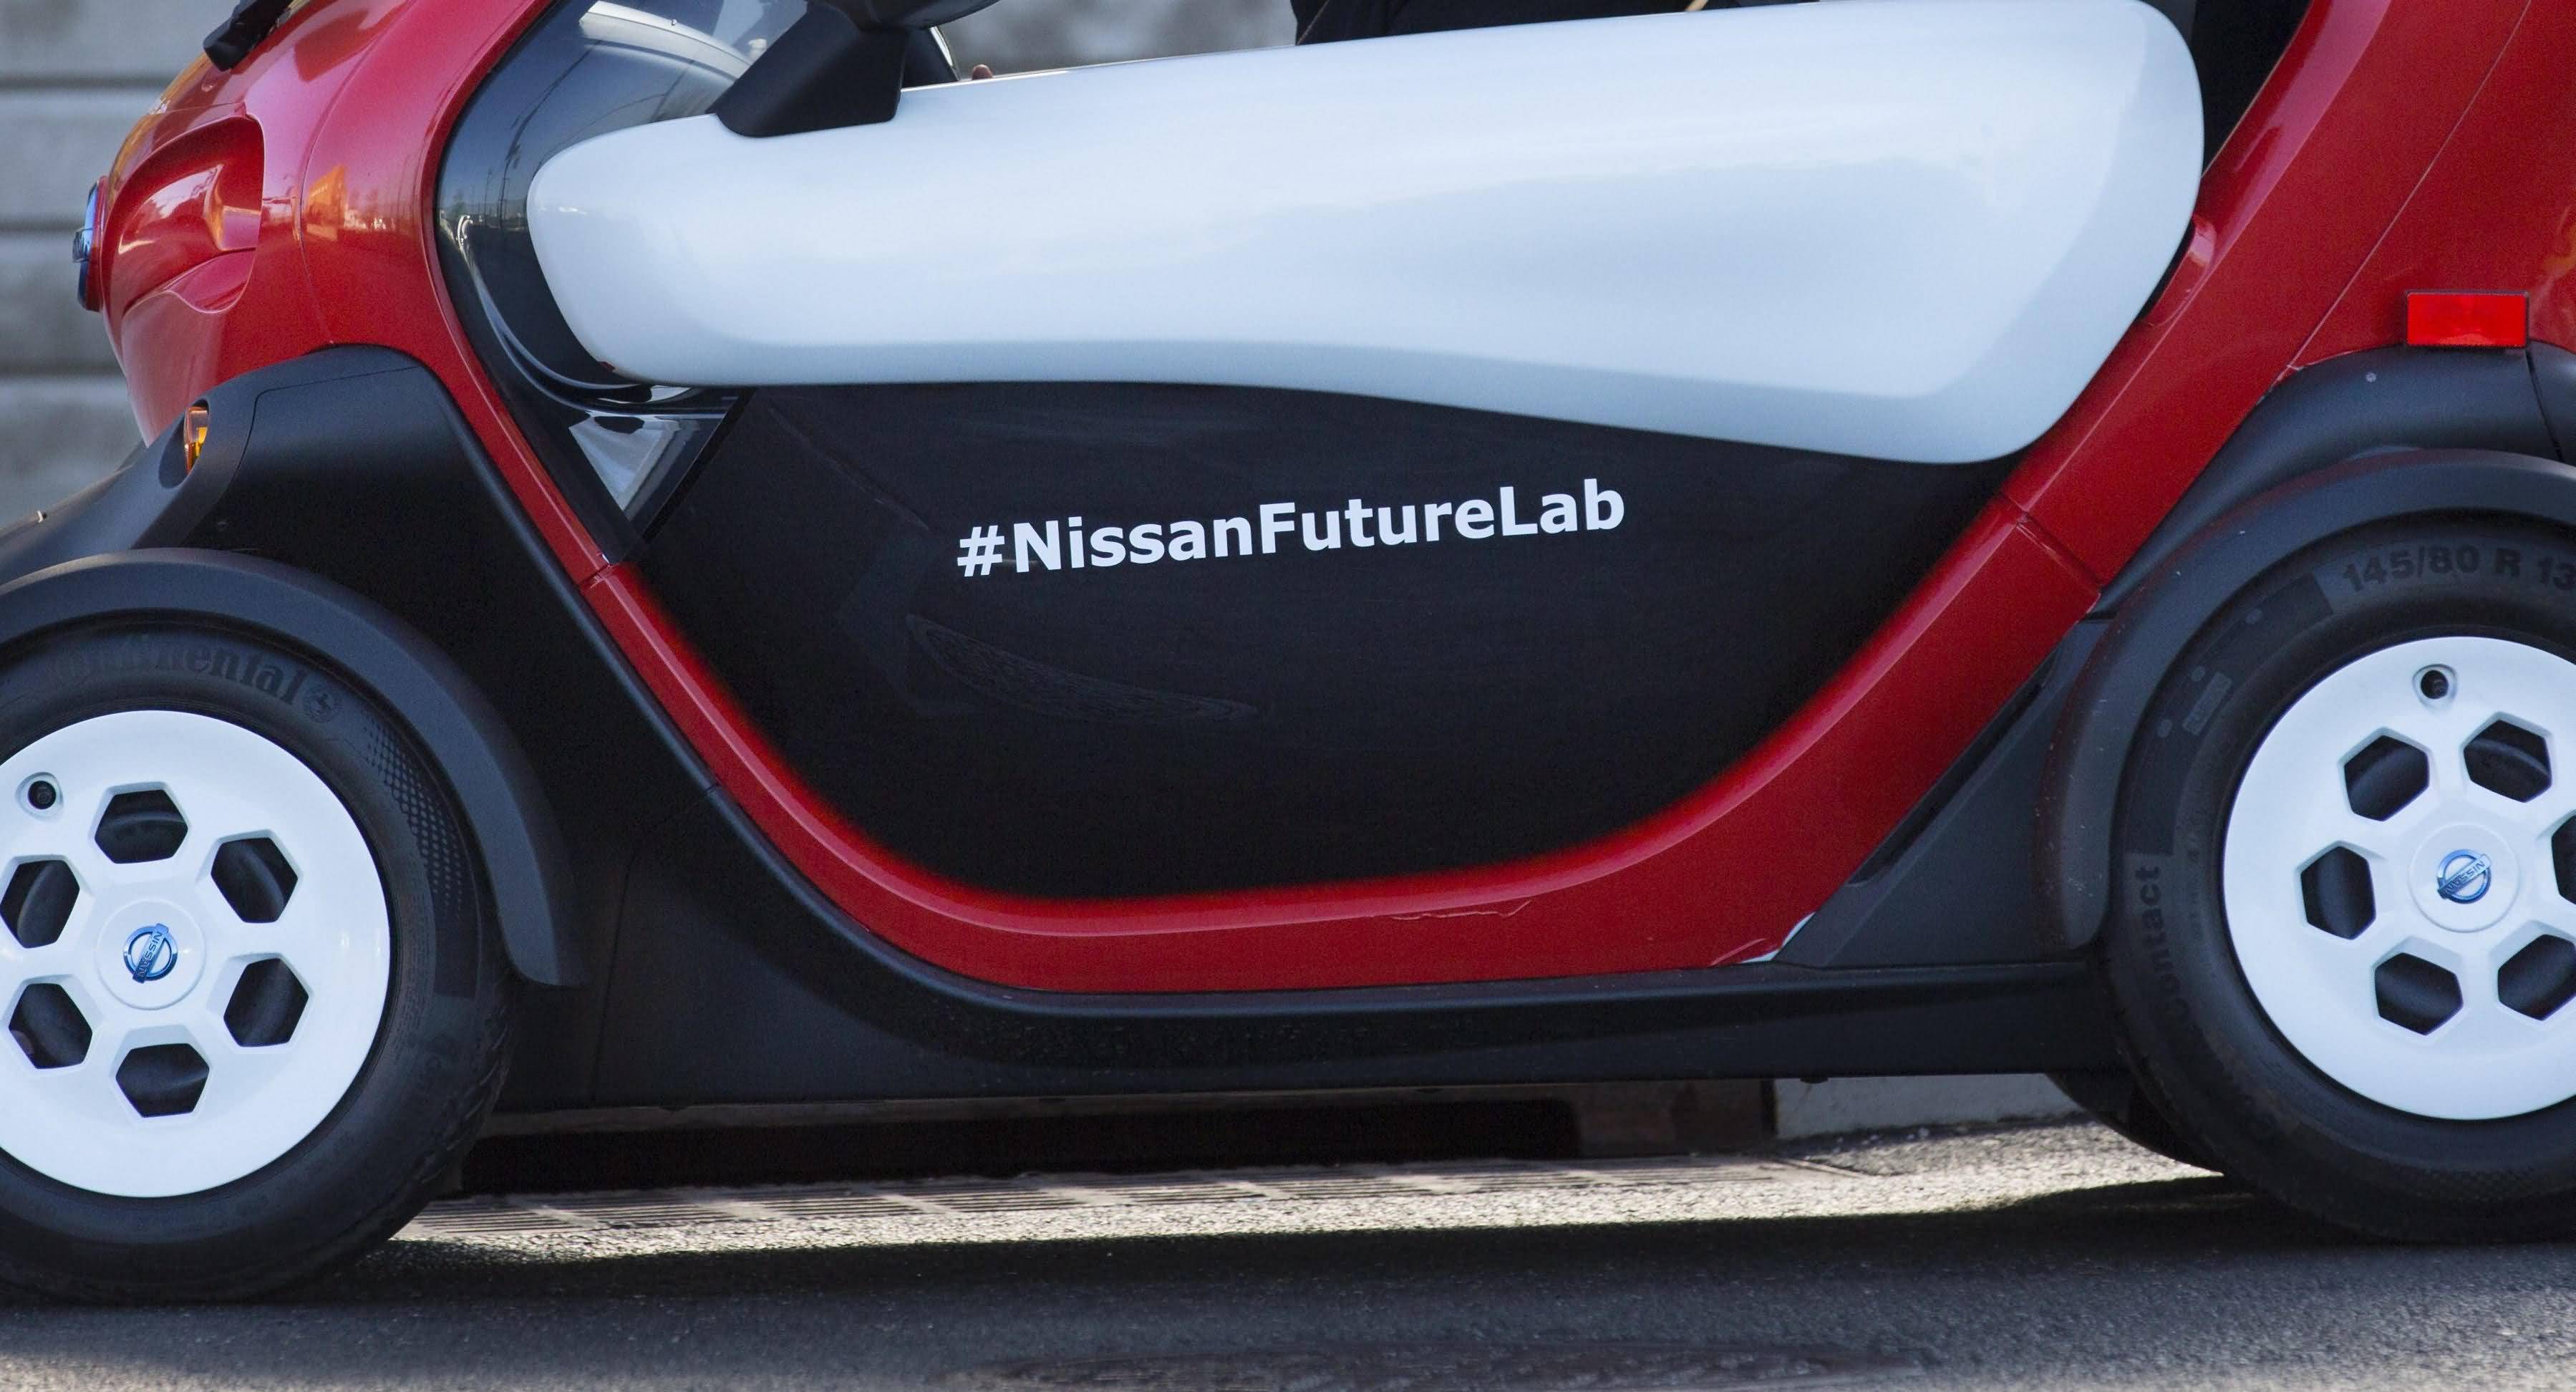 NissanÕs Future Lab experiments imagine new vehicle ownership